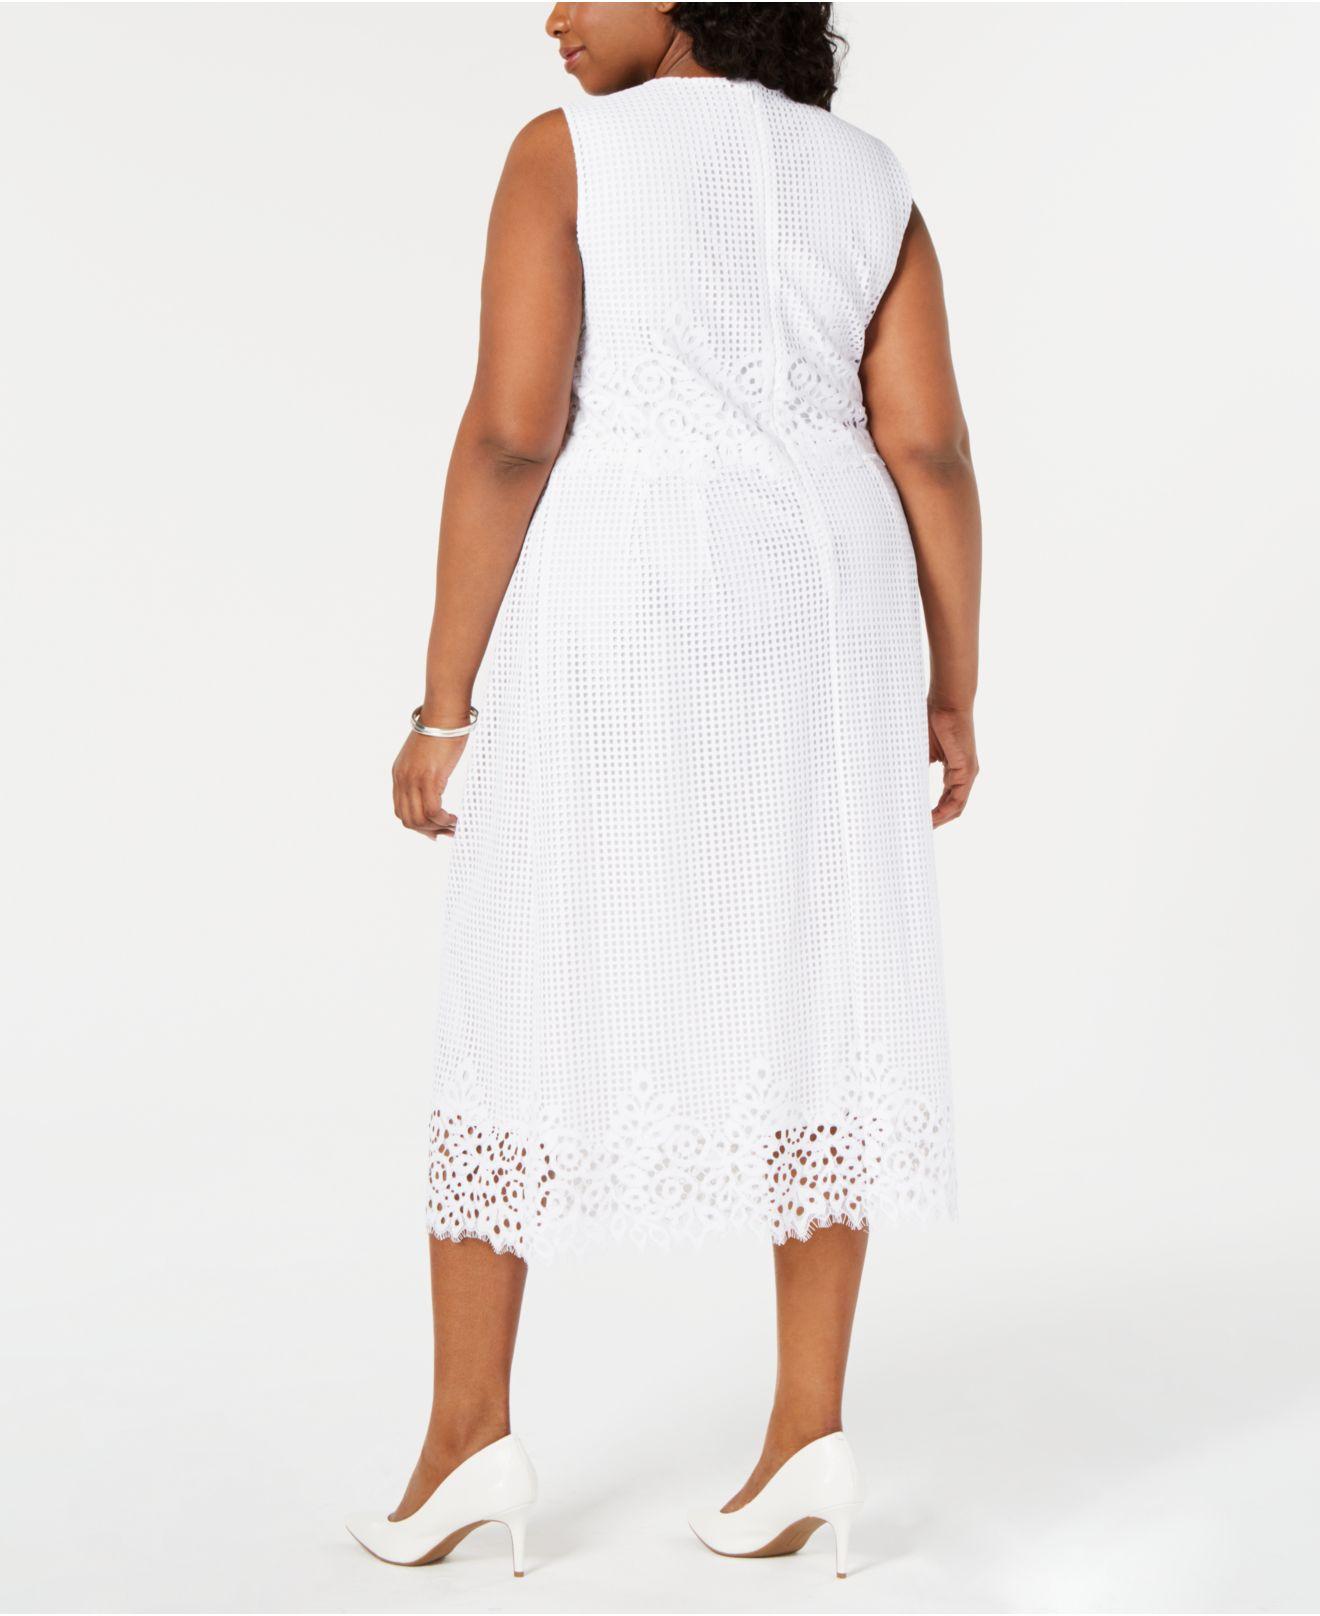 white macys dresses Big sale - OFF 66%